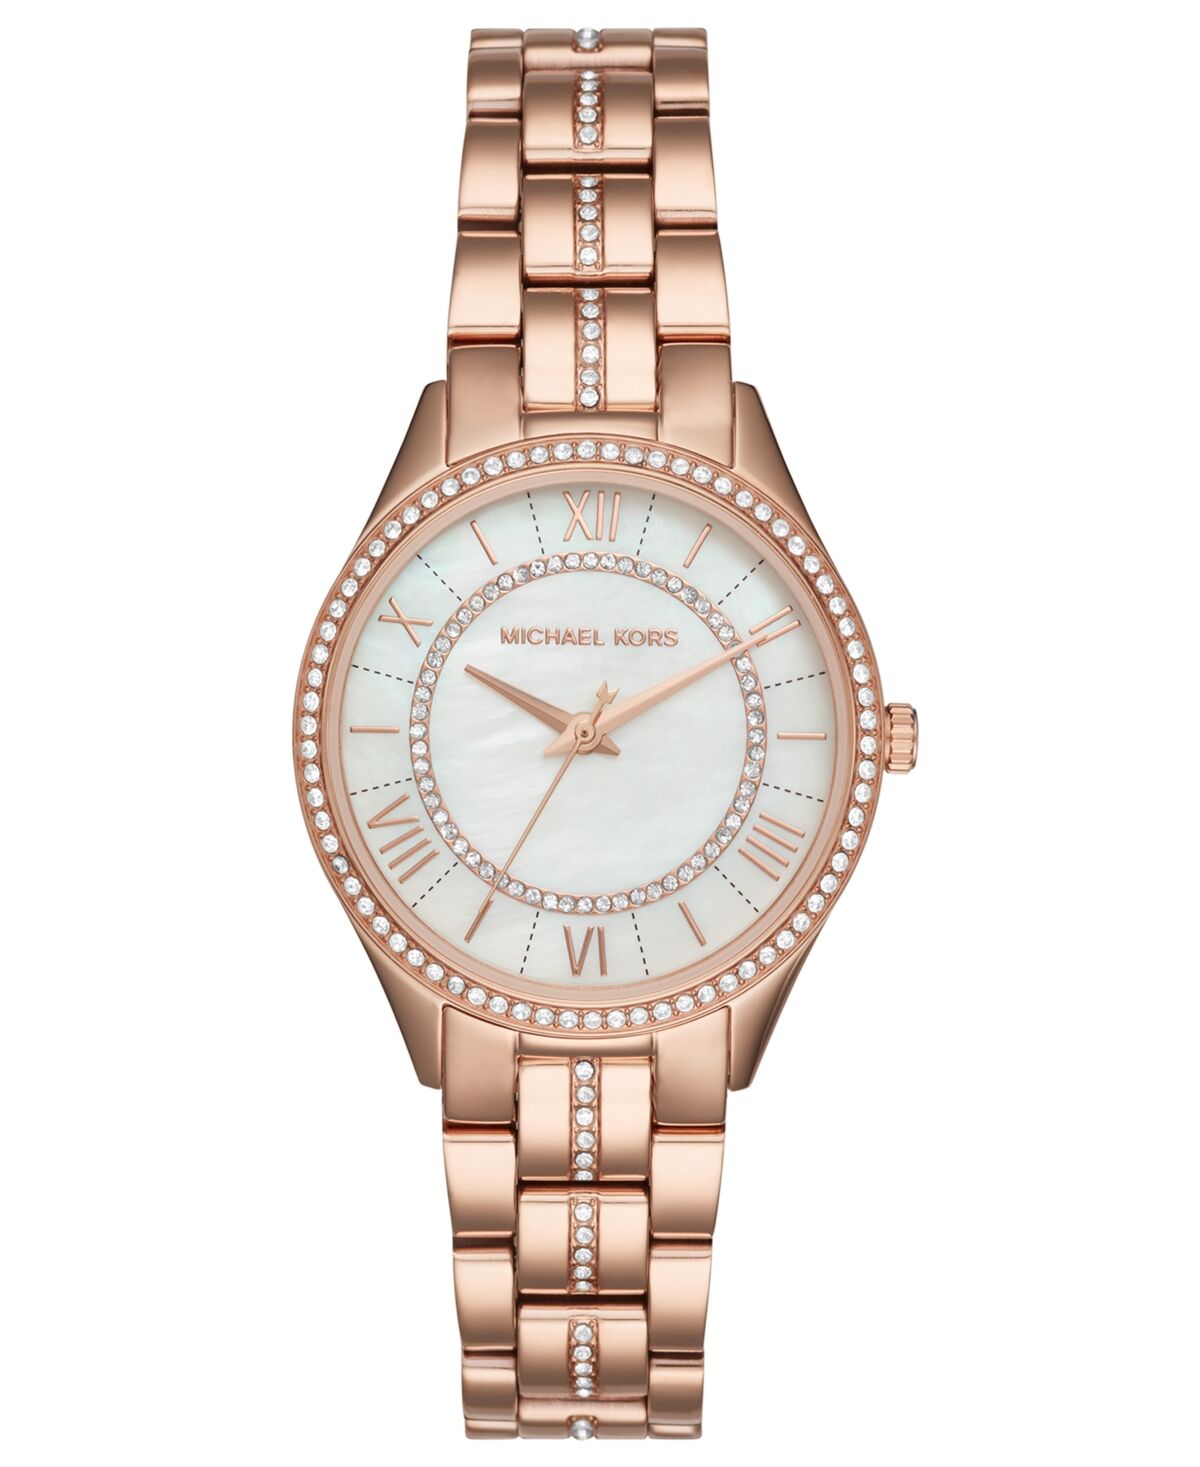 Michael Kors Women's Lauryn Rose Gold-Tone Stainless Steel Bracelet Watch 33mm - Rose Gold